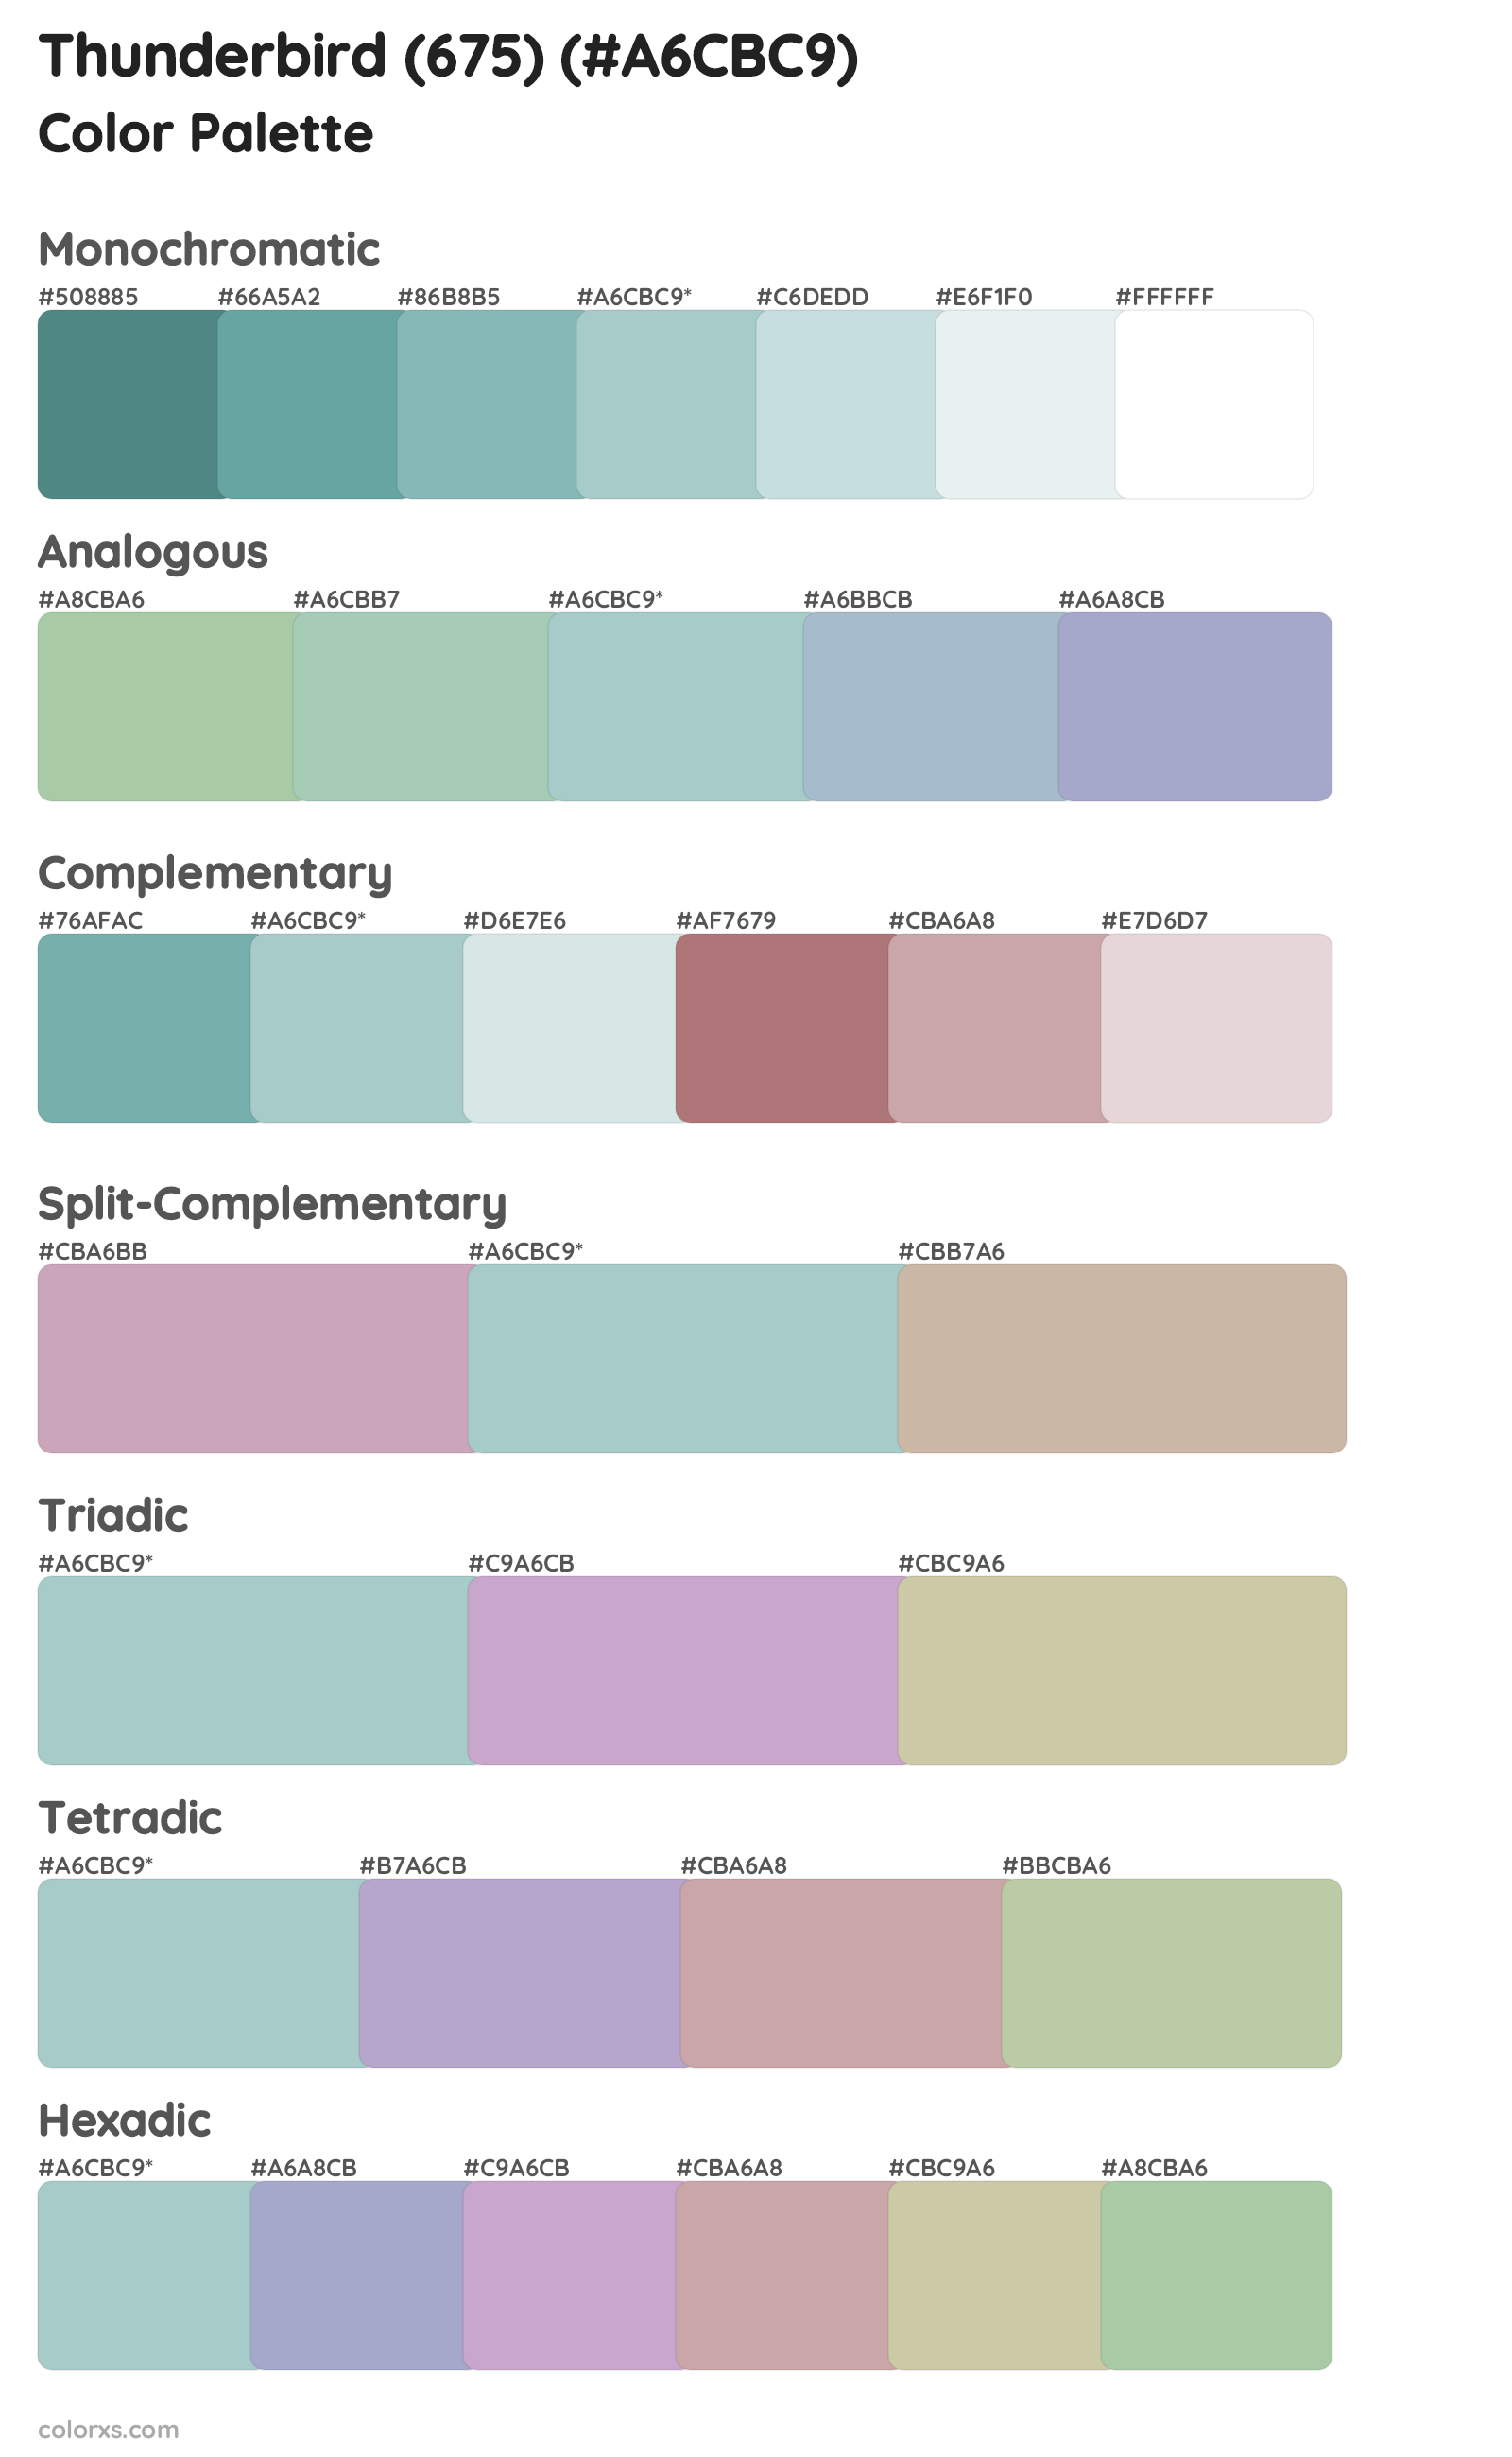 Thunderbird (675) Color Scheme Palettes